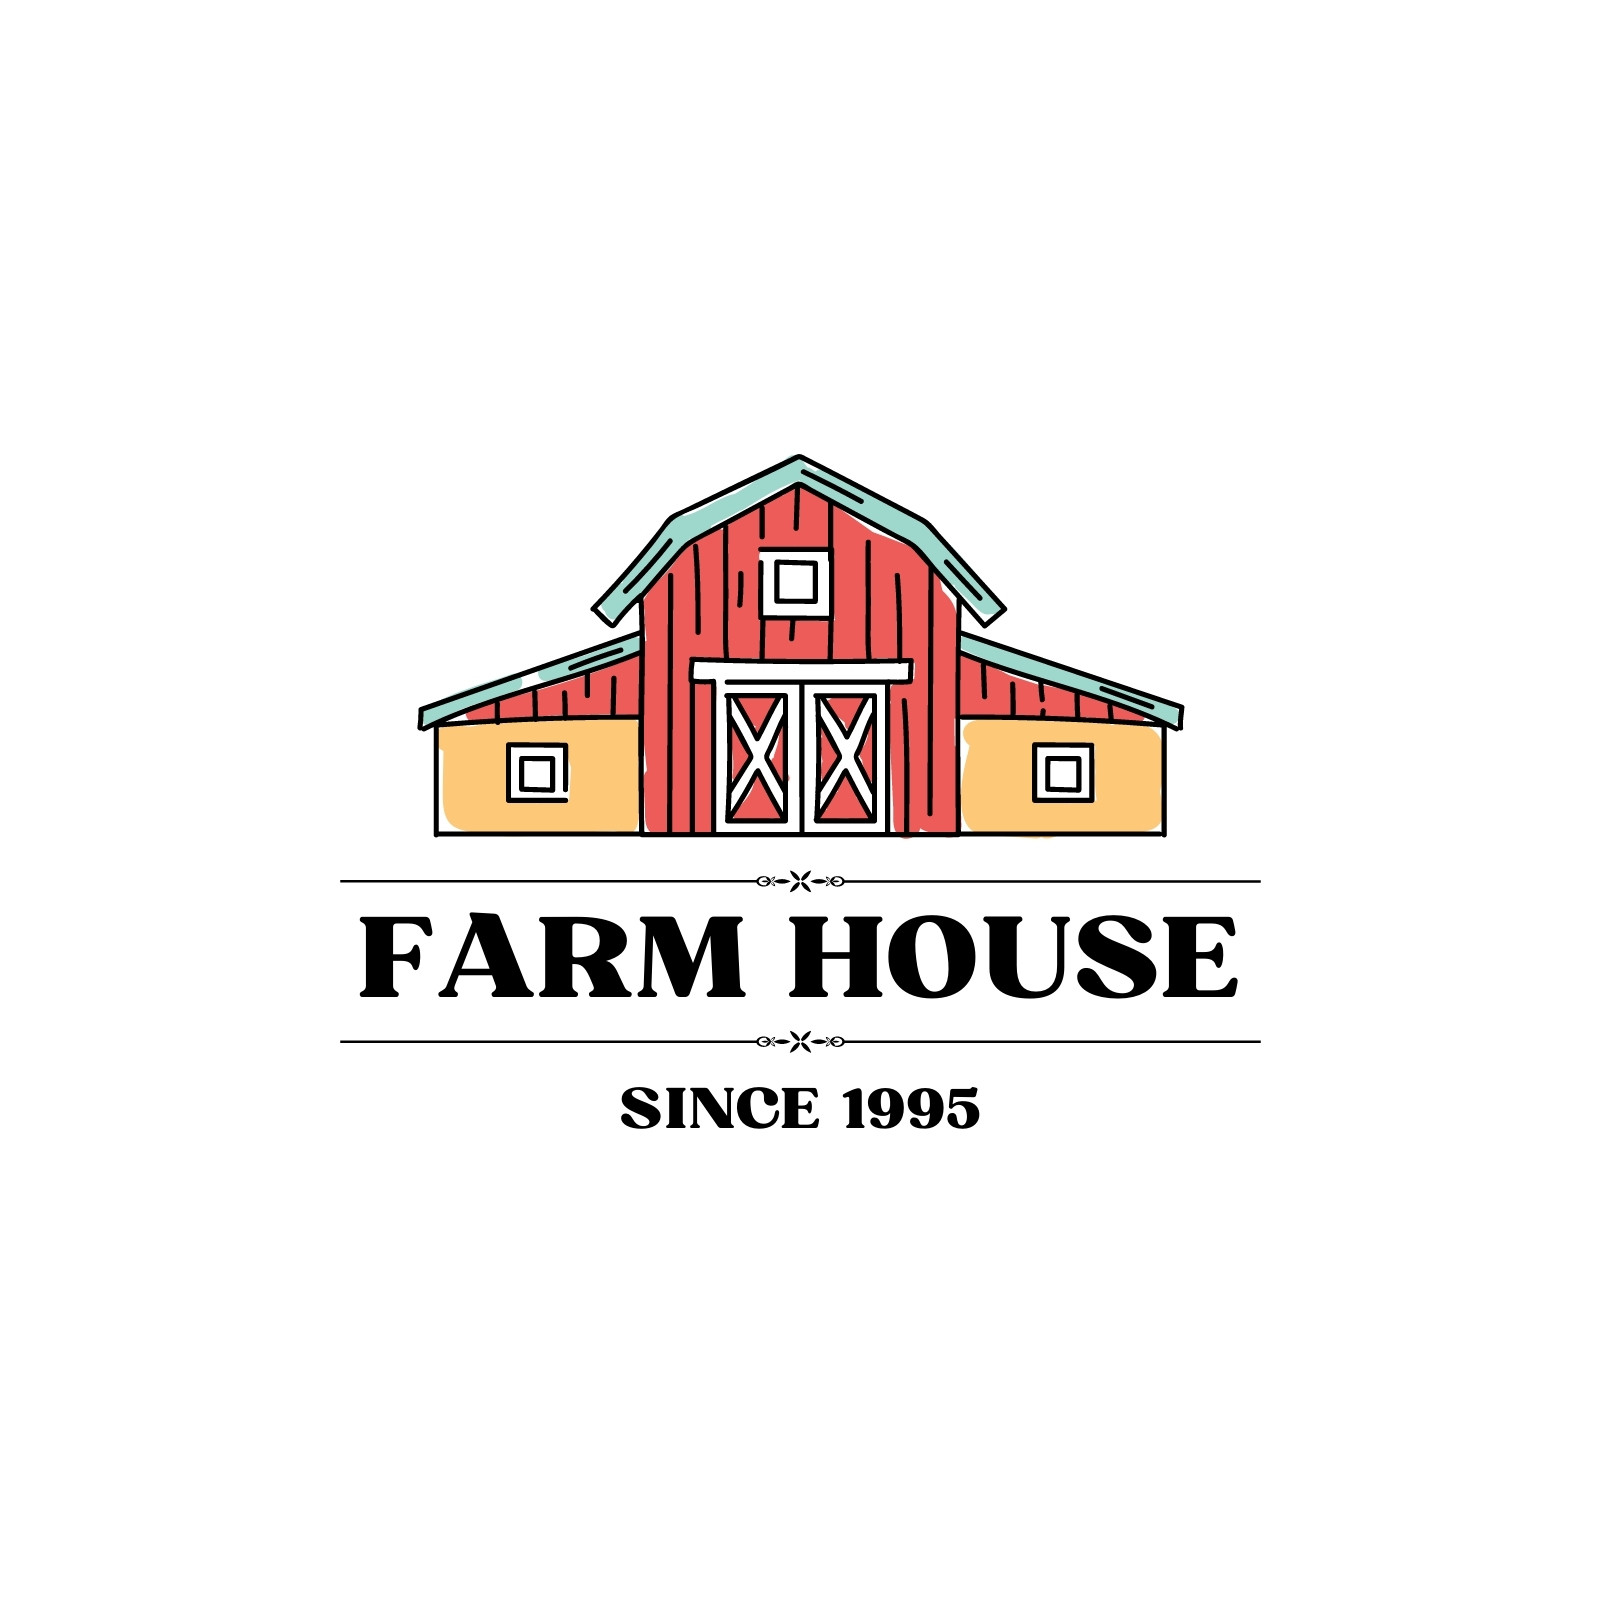 Vintage Farm House Logo Design | House logo design, Home logo, Farm logo